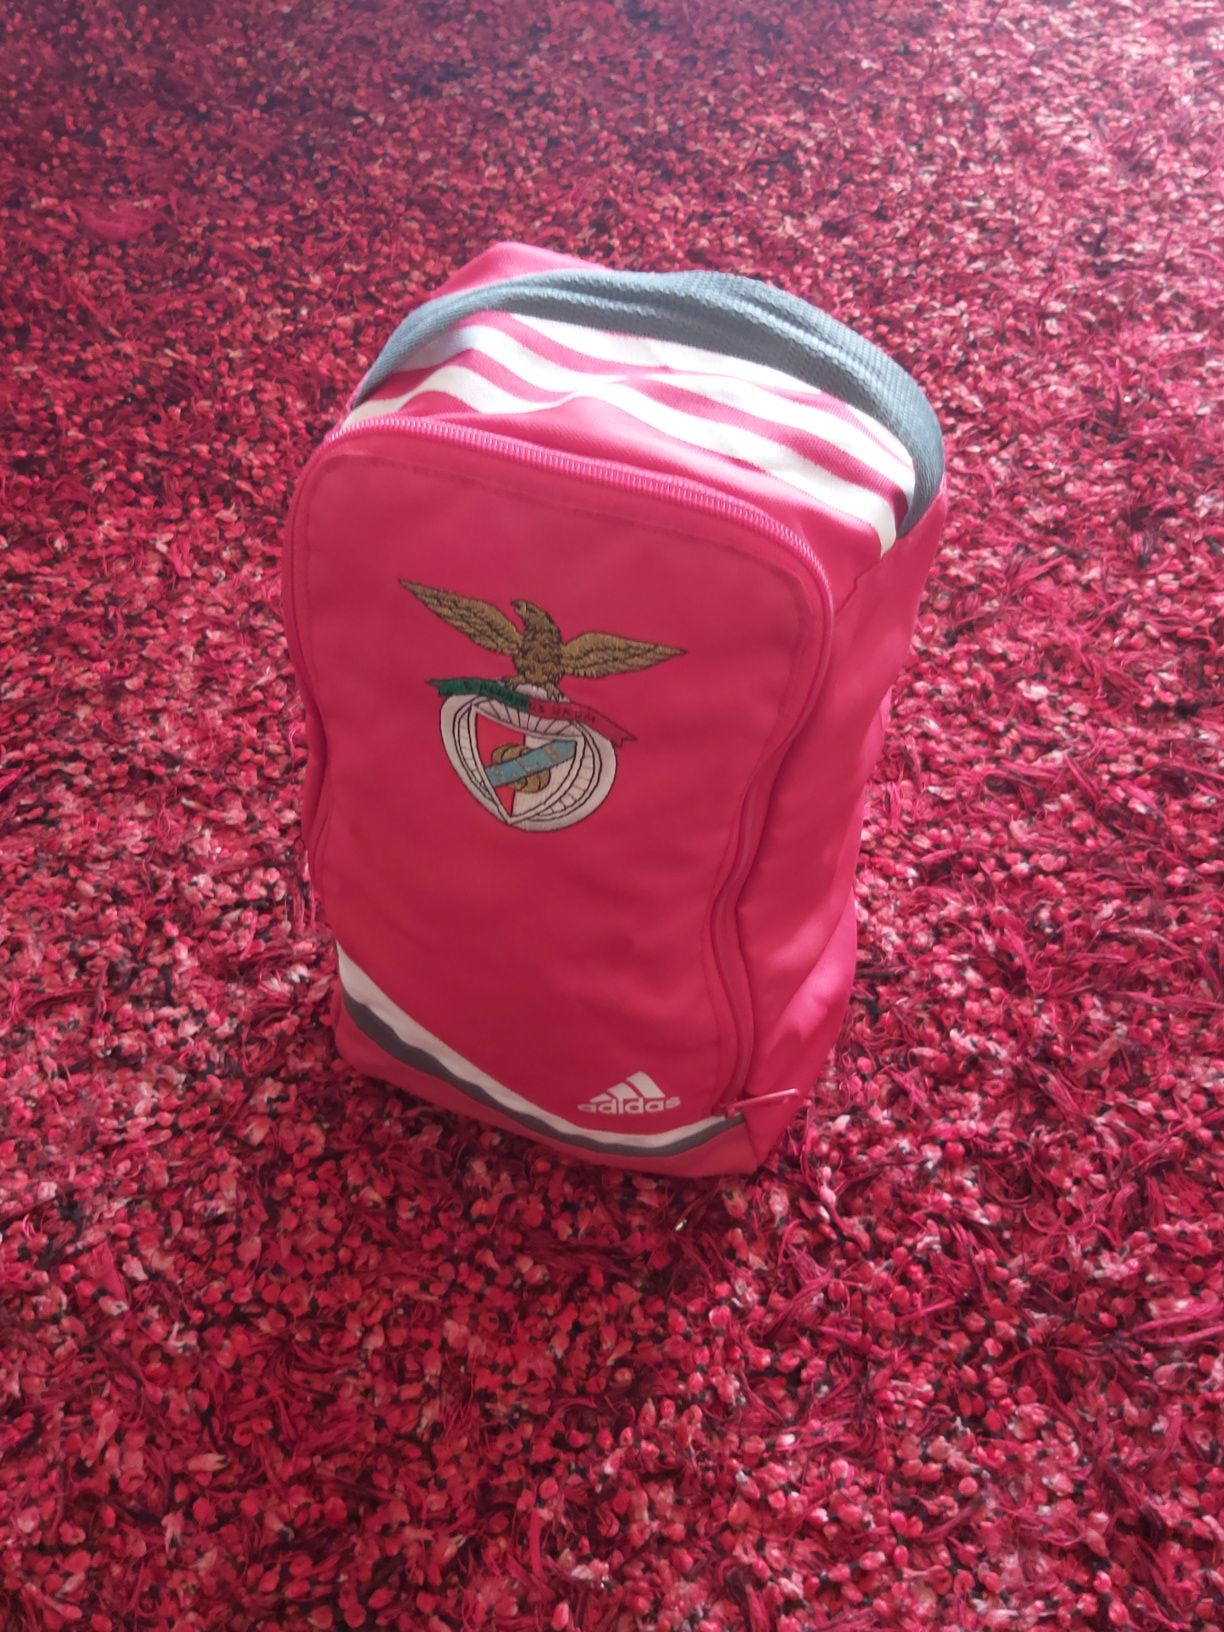 Bolsa (mochila saco porta calçado) Desporto SL Benfica (SLB)